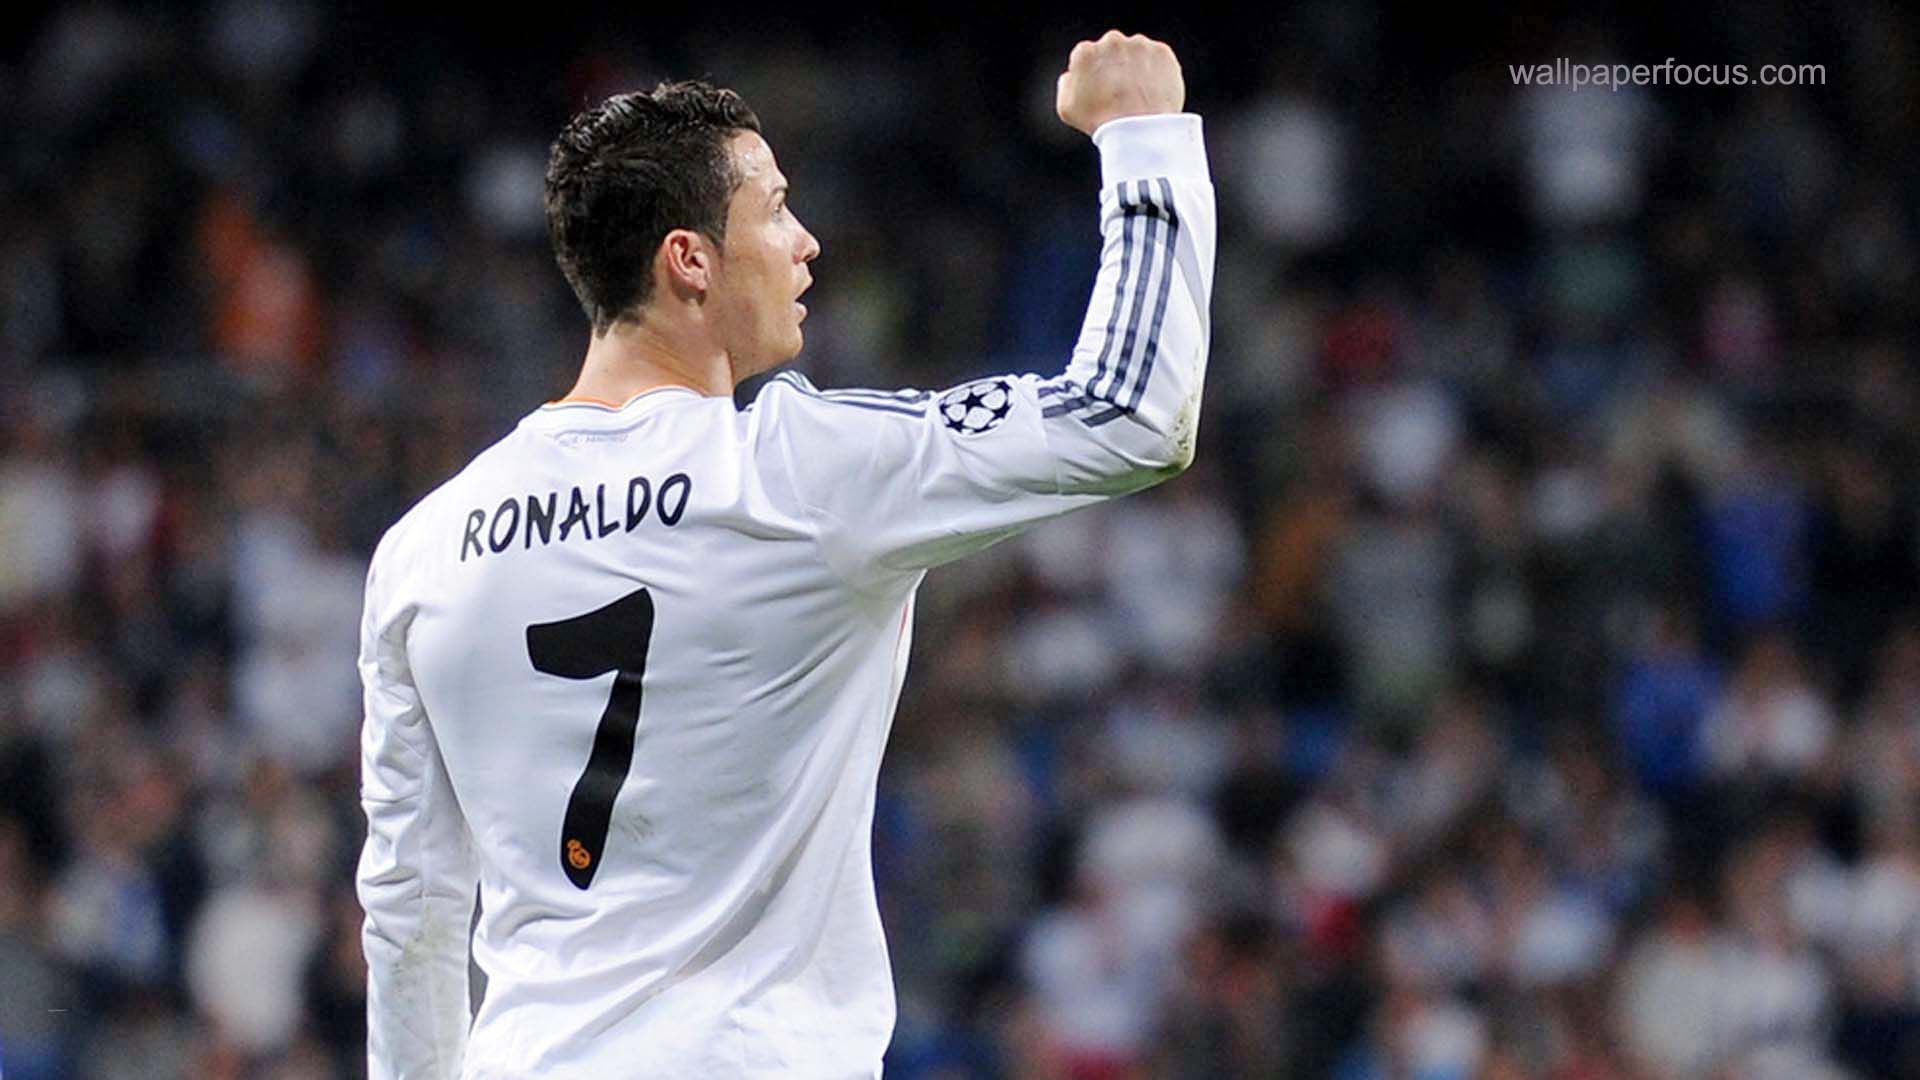 Cristiano Ronaldo - Biography